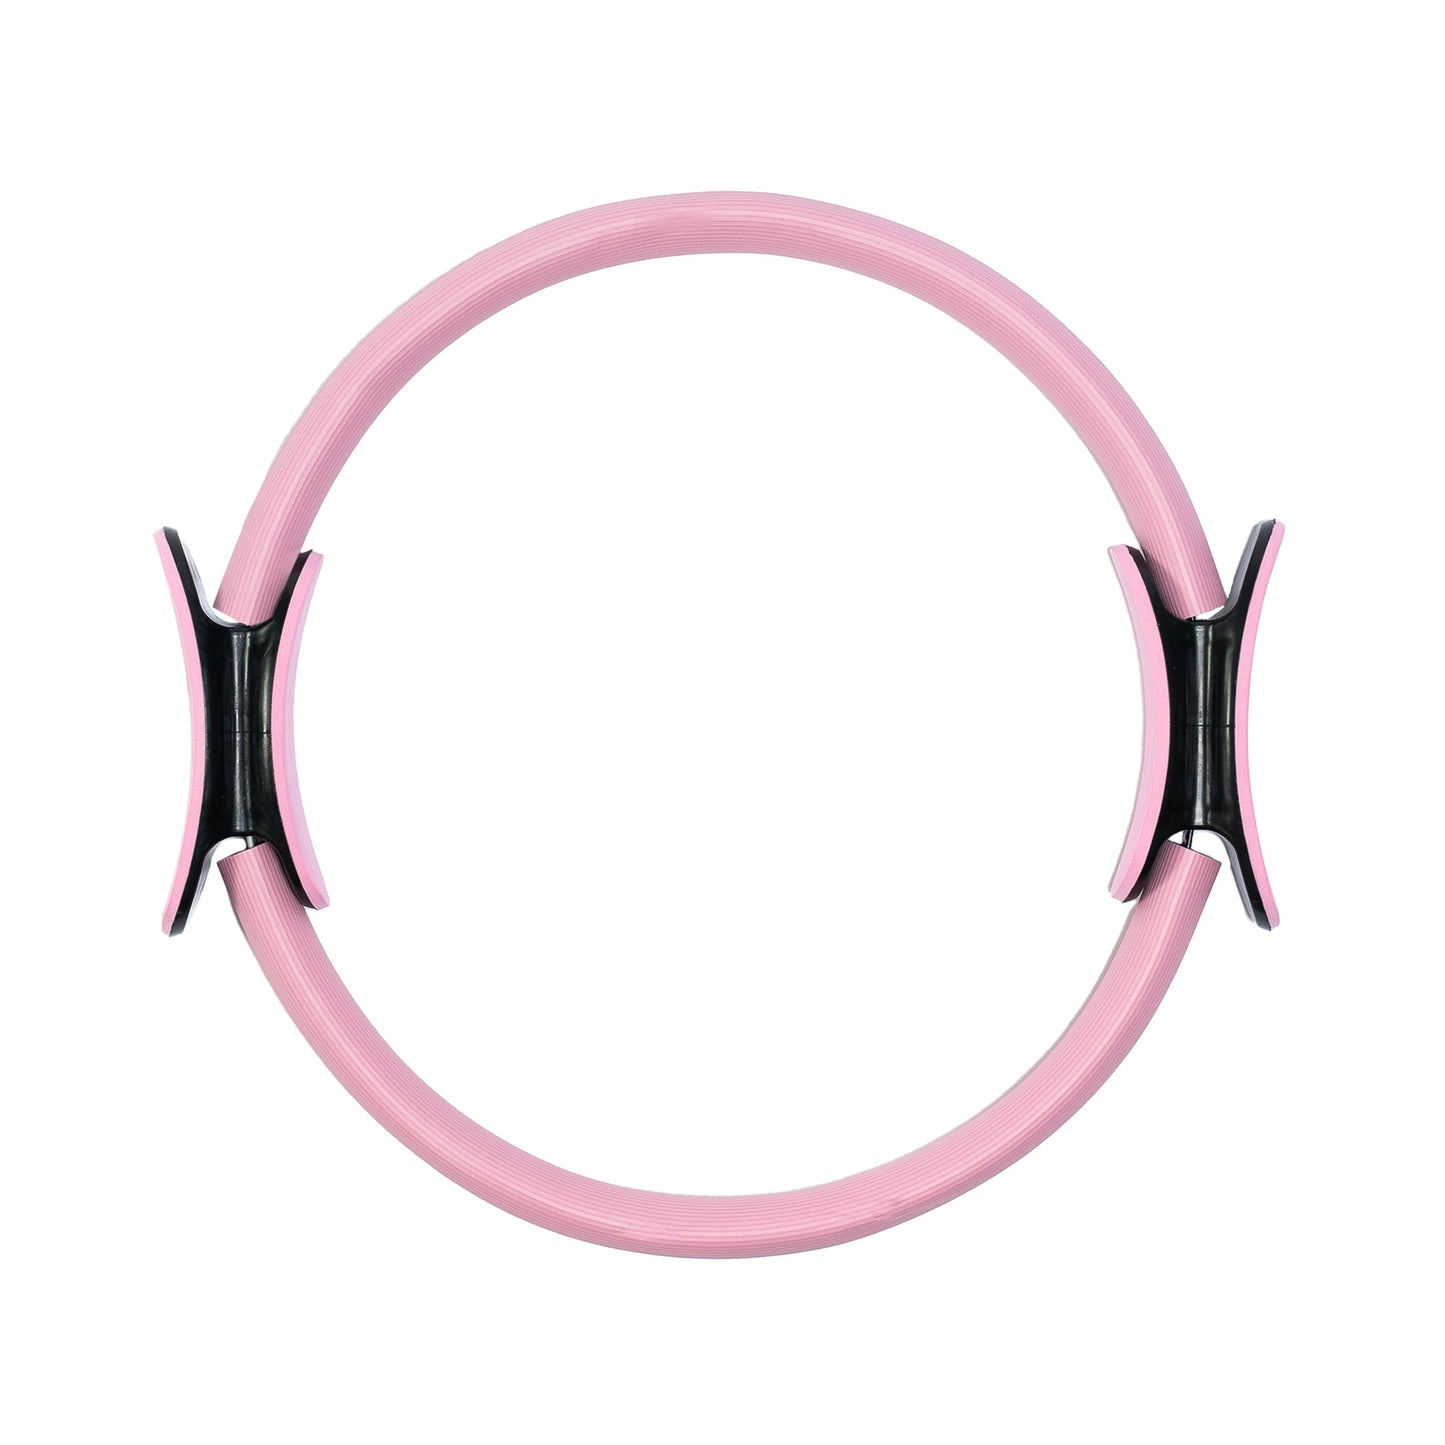 Professional Body Toning Yoga & Pilates Ring in Pink